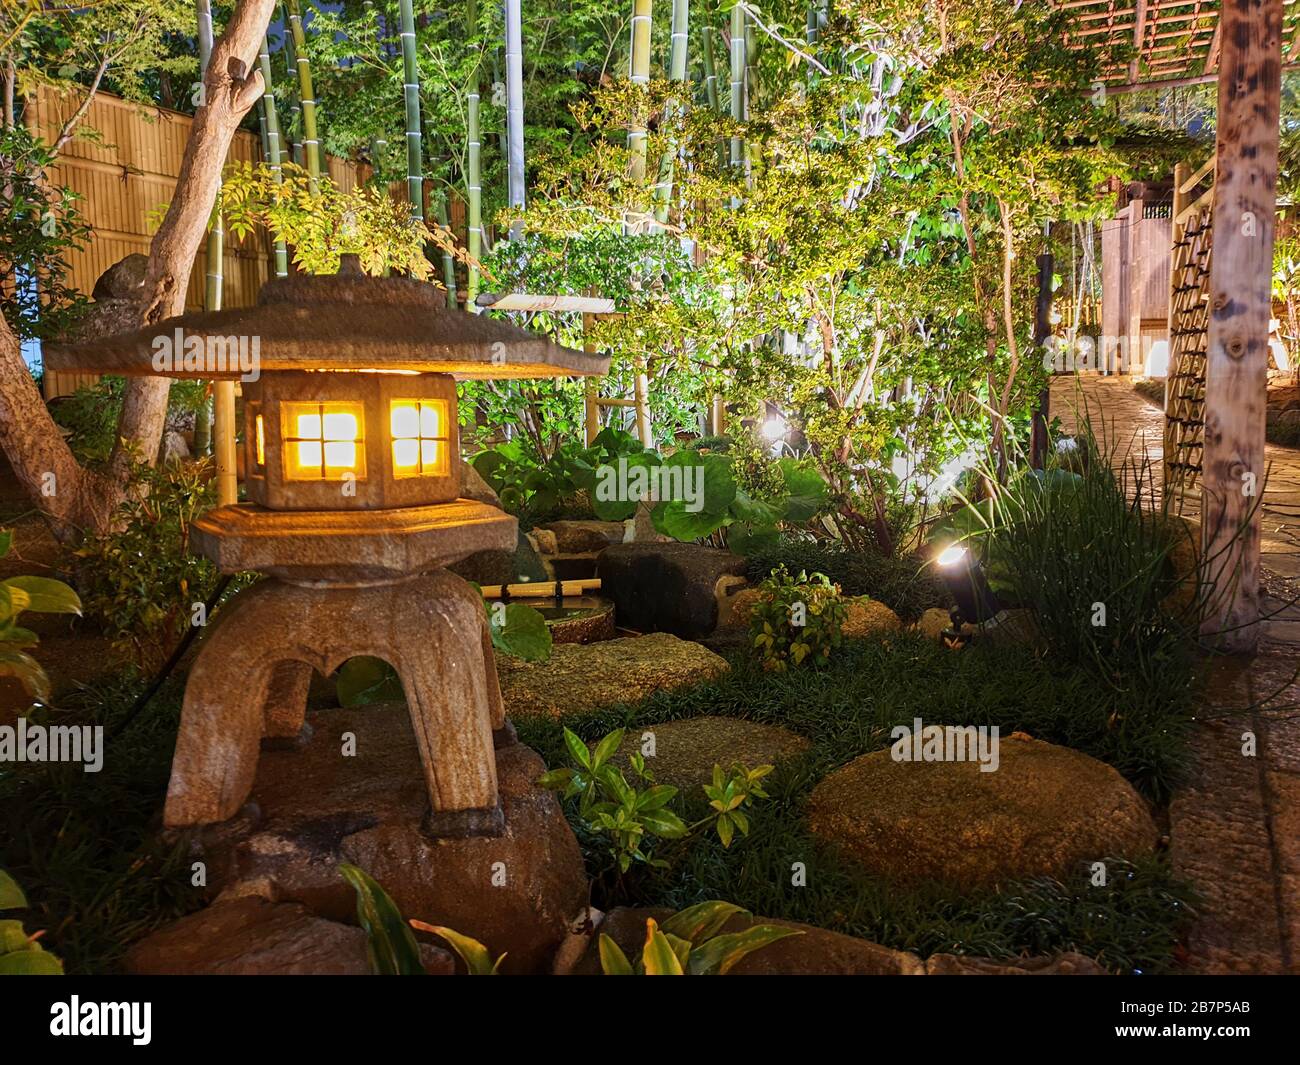 Japanese style garden with nicely illuminated sculpture Stock Photo